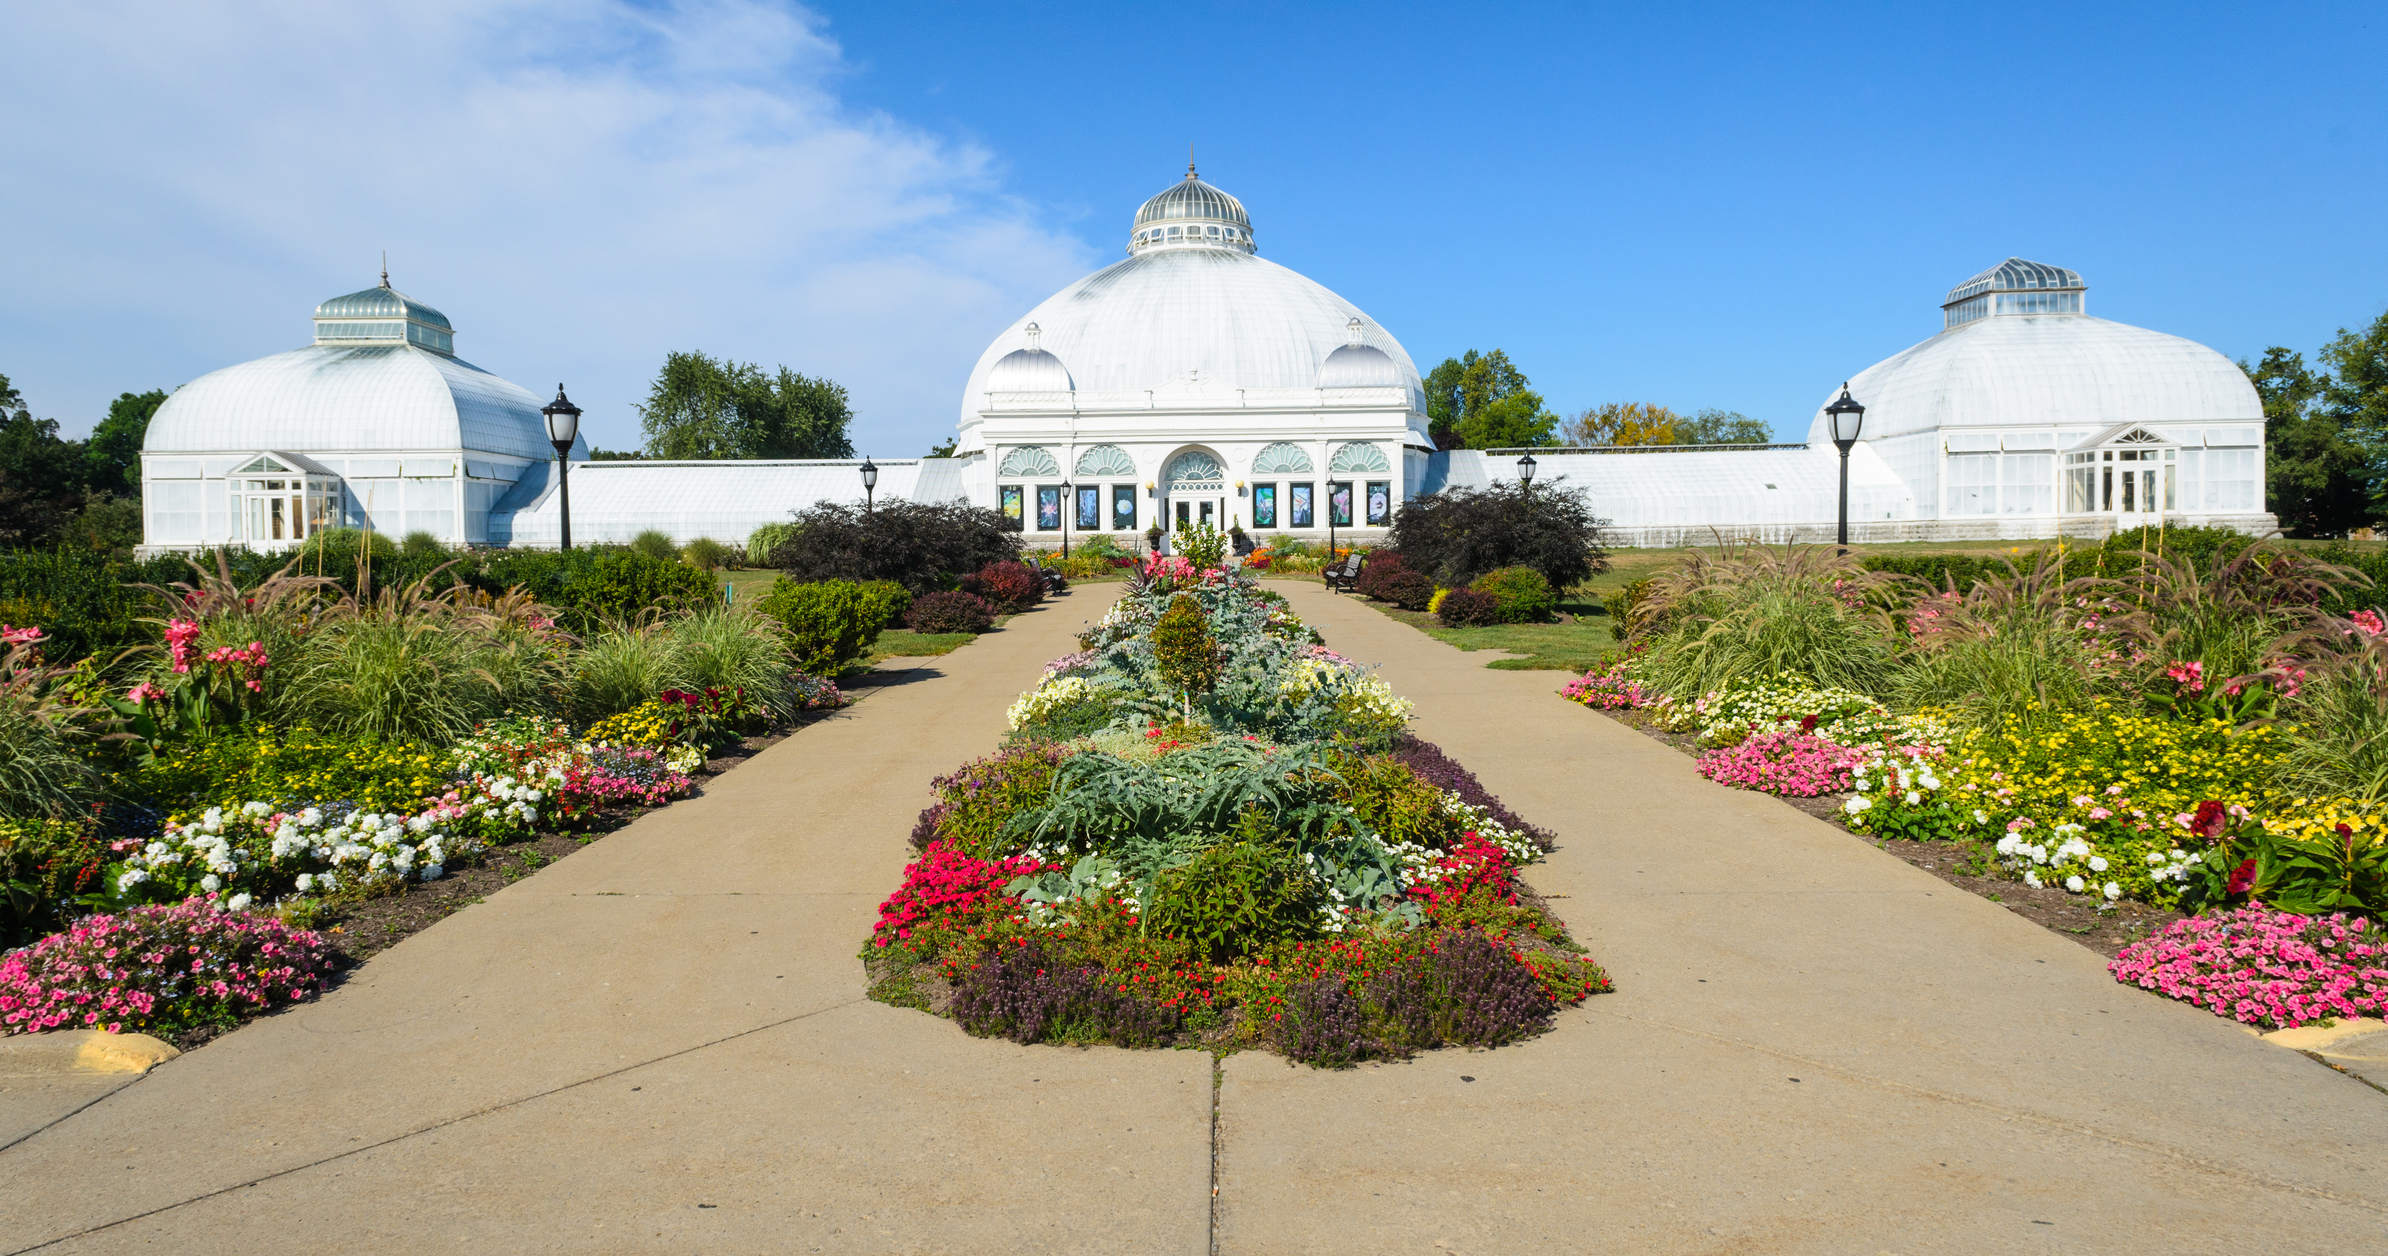 The Buffalo and Erie County Botanical Gardens